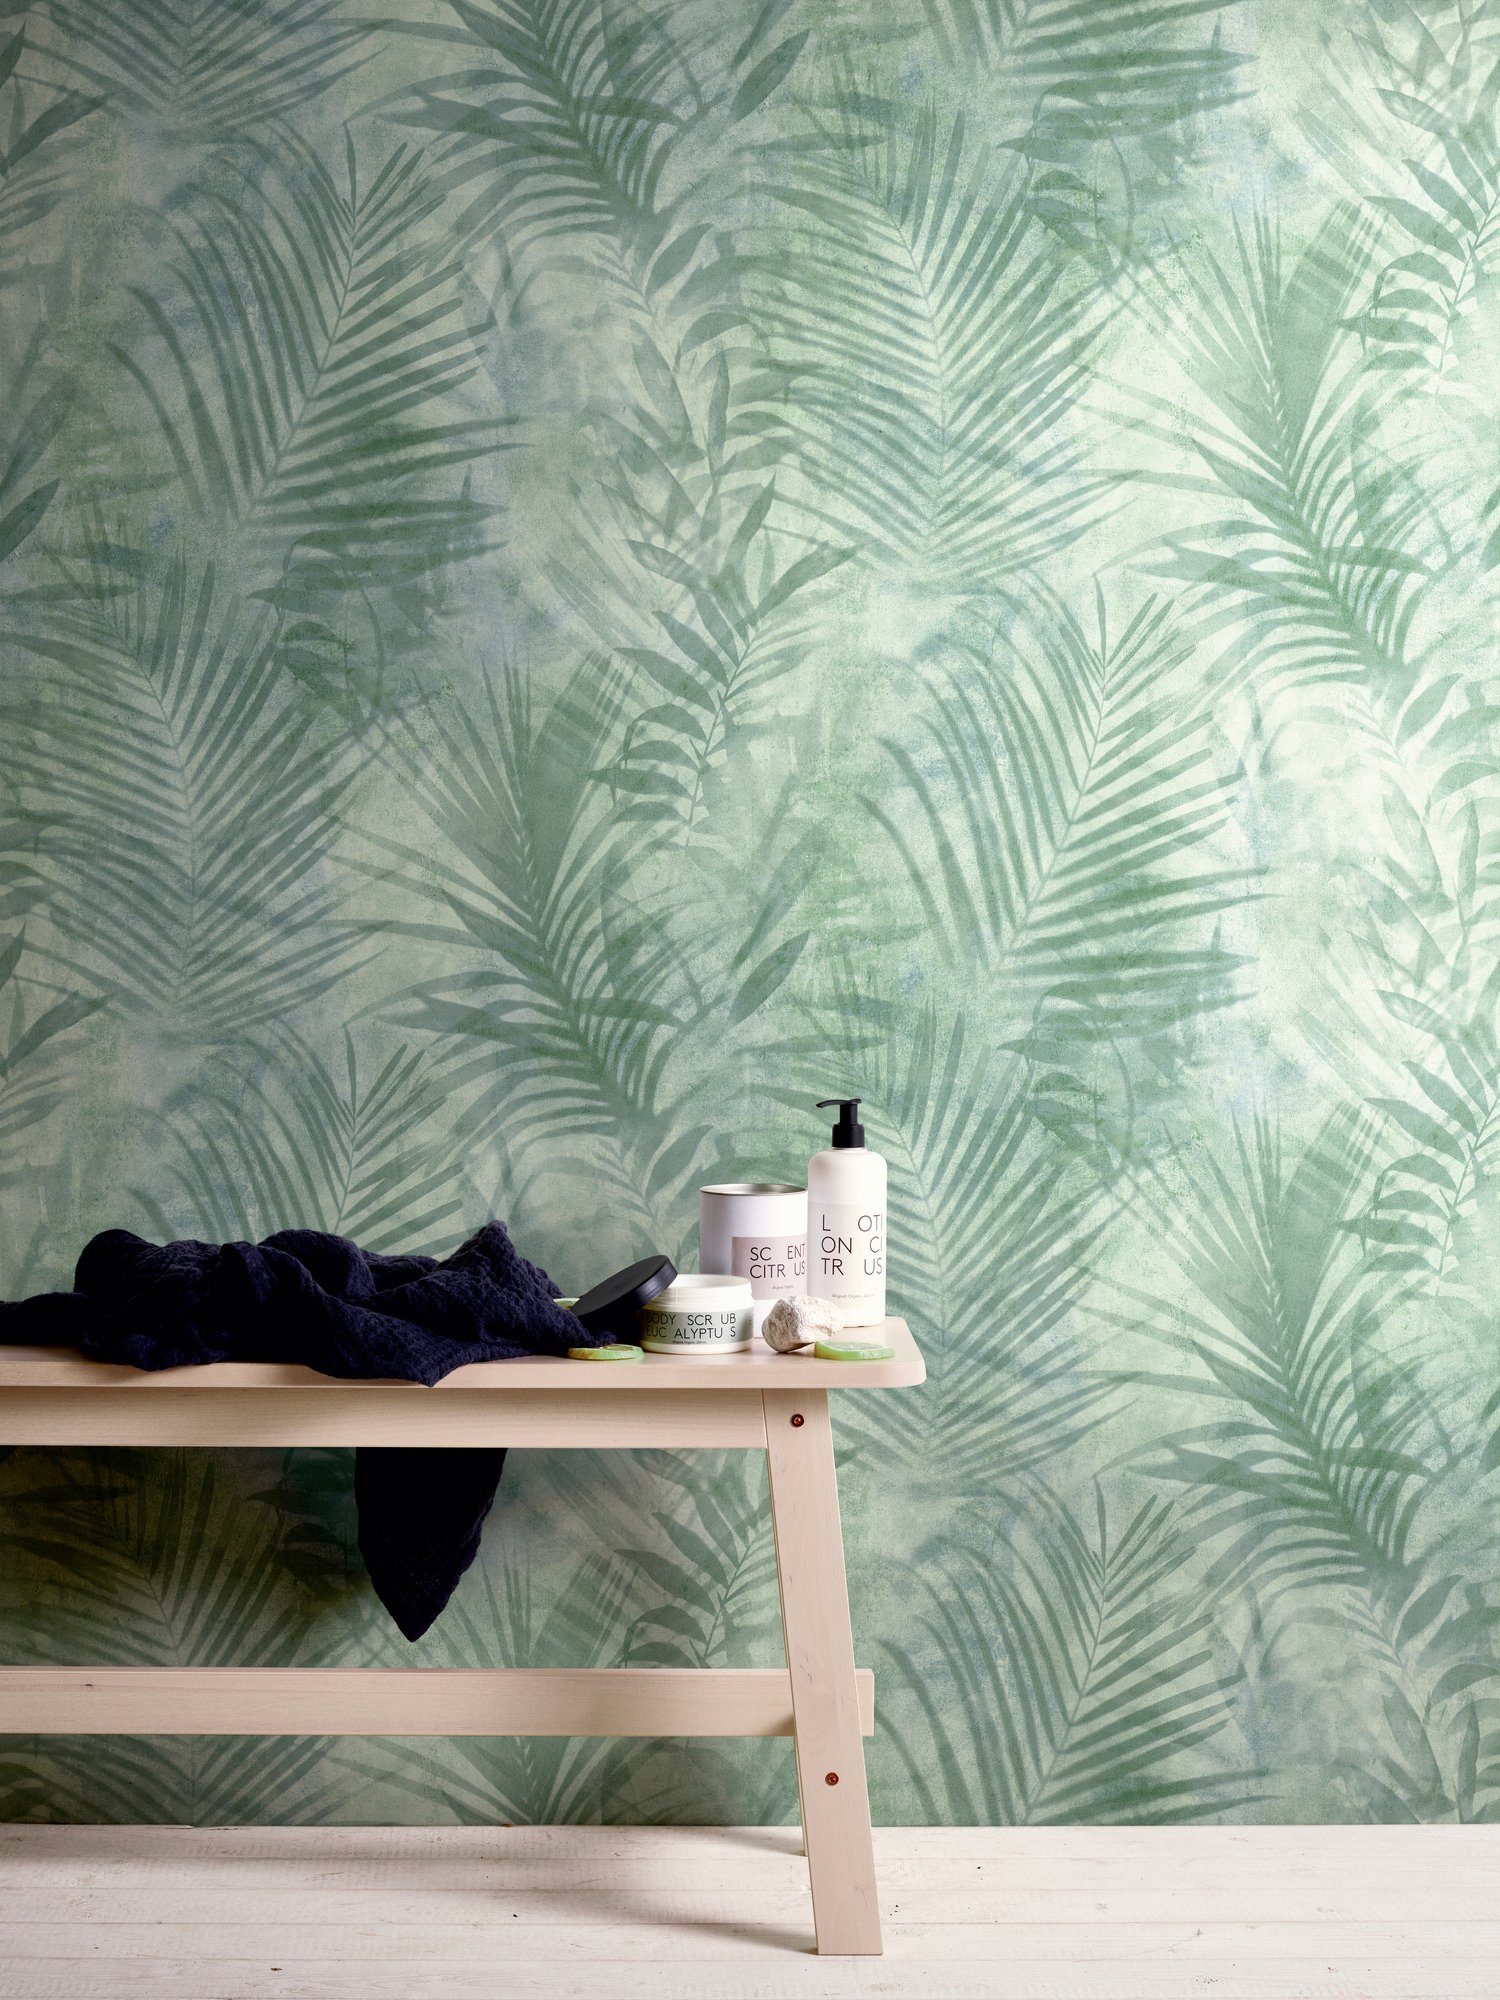 A.S. Création 2.0 Vliestapete Bude Concret mit Palmenblättern, Tapete Tropical Dschungeltapete floral, grün/grau Neue Palmen